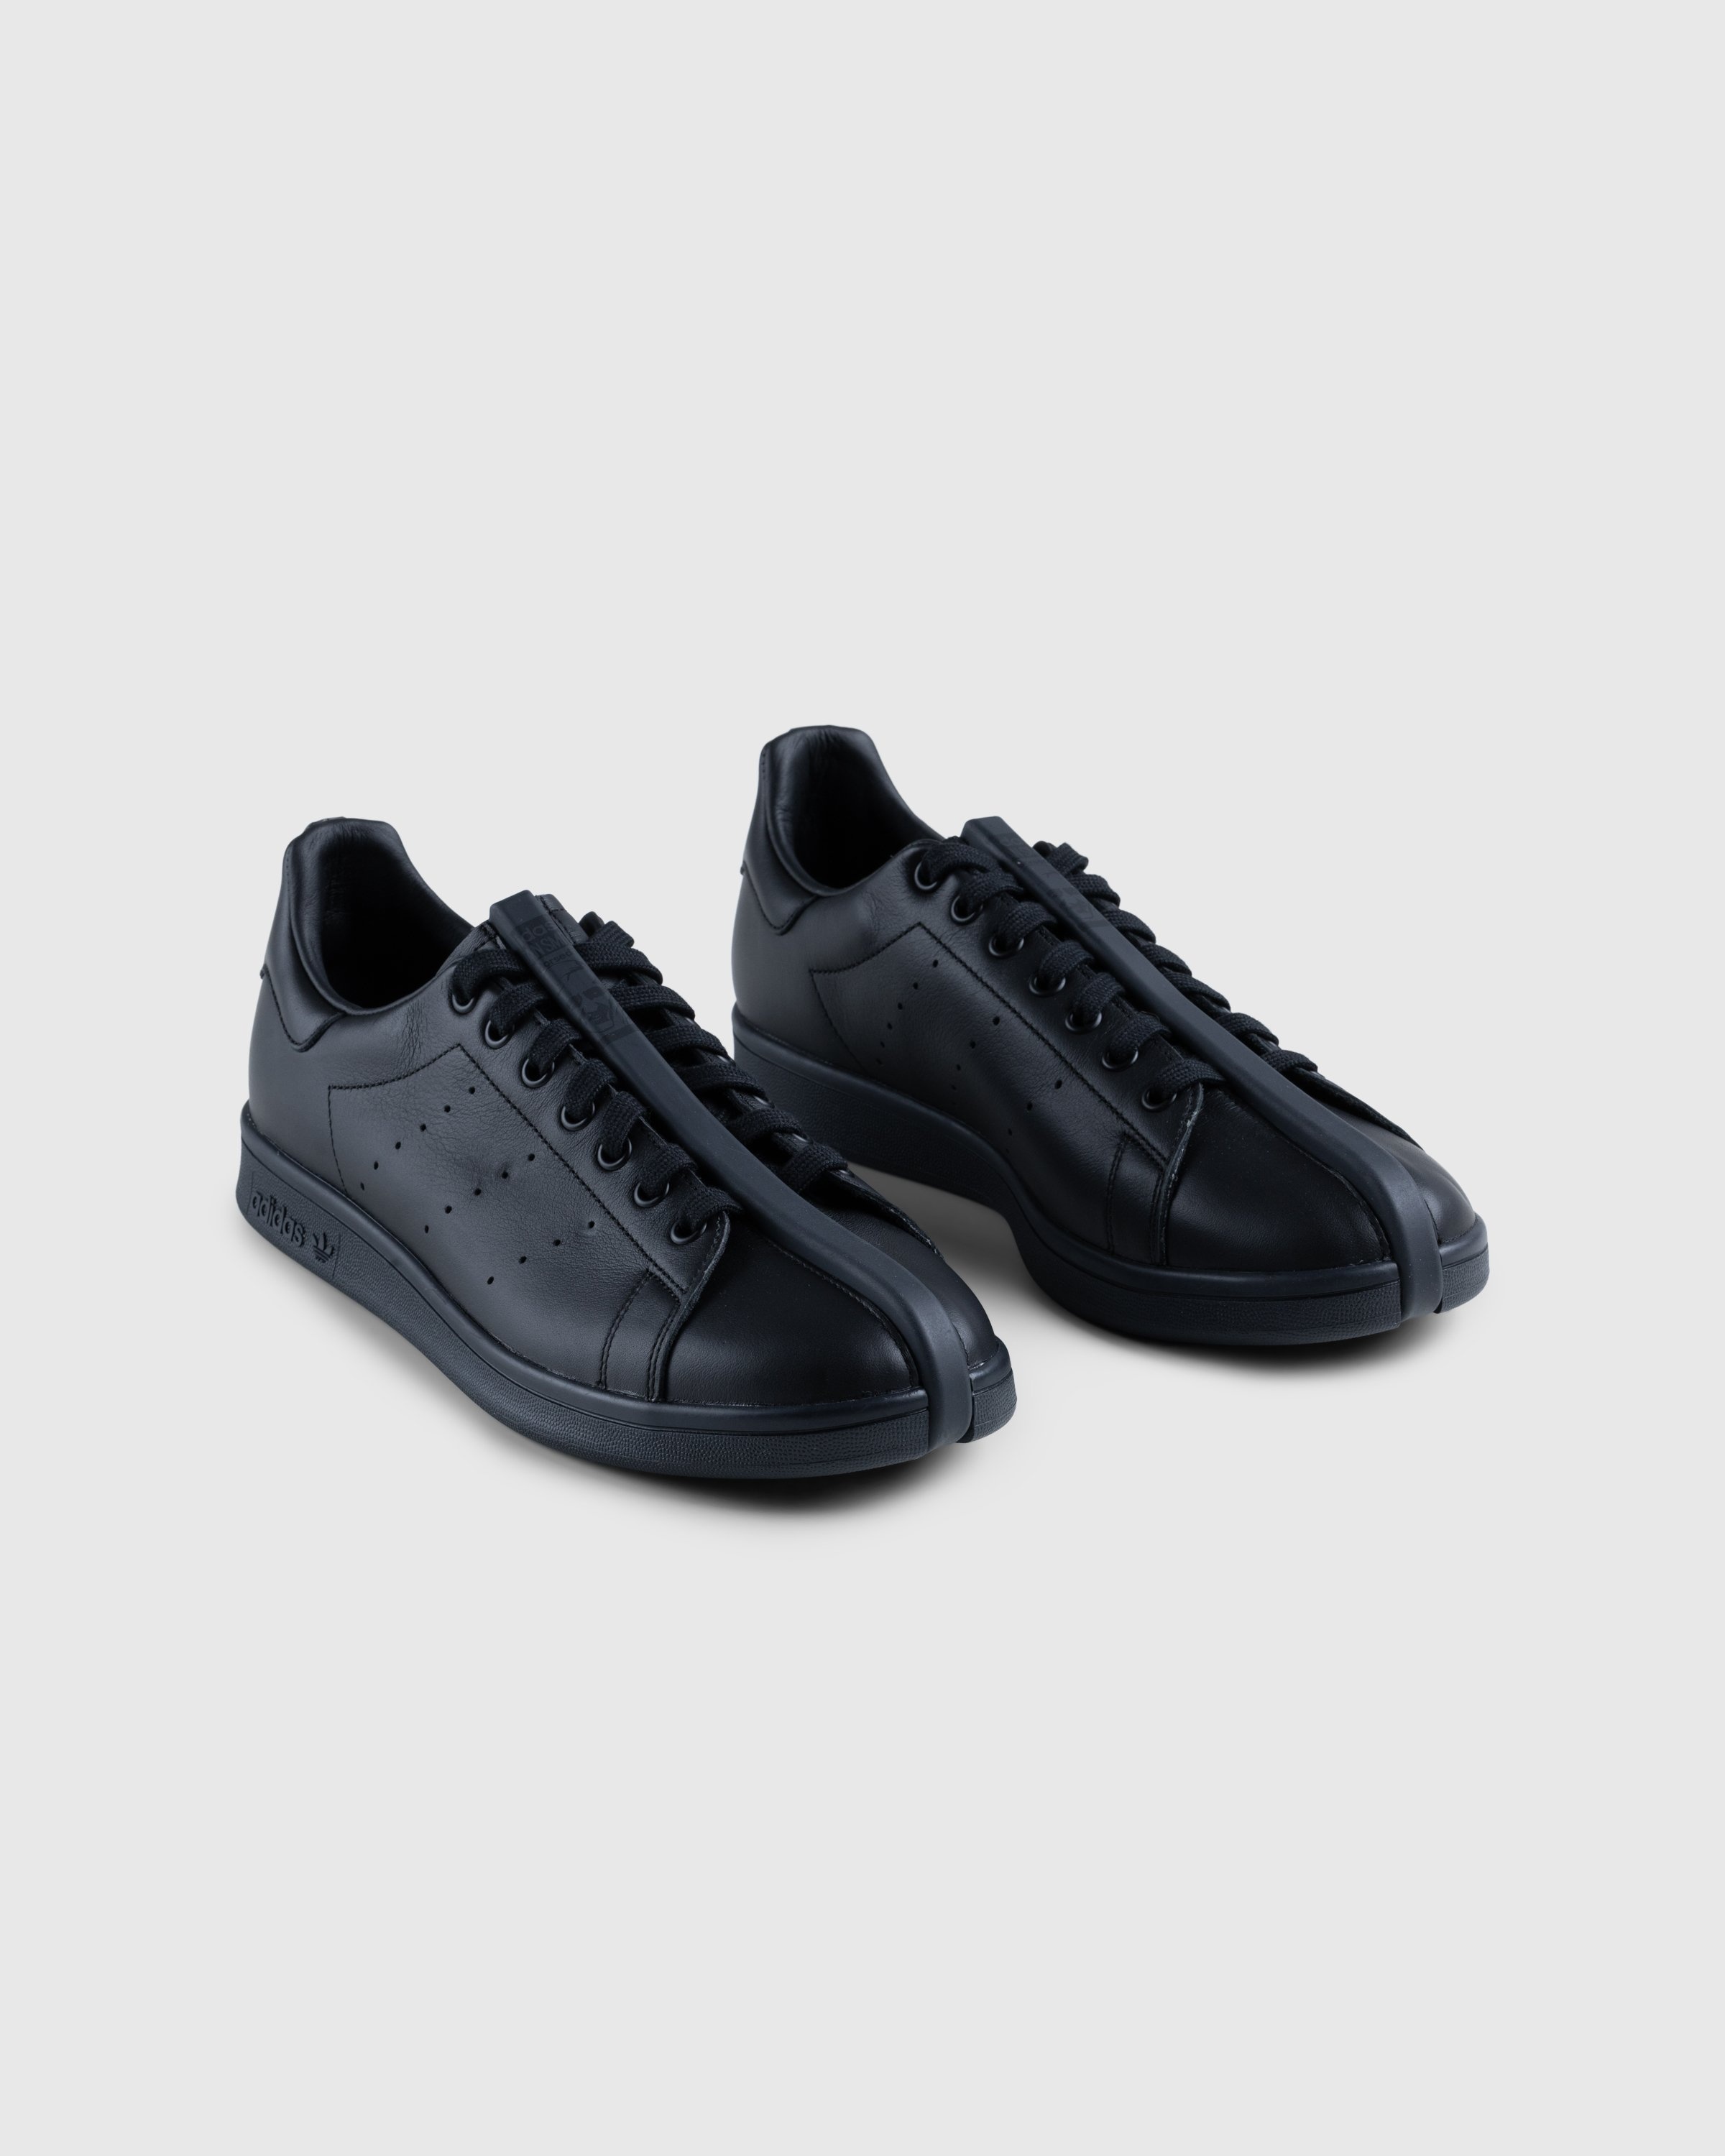 Adidas – CG Split Stan Smith Core Black/Granite - Sneakers - Black - Image 3